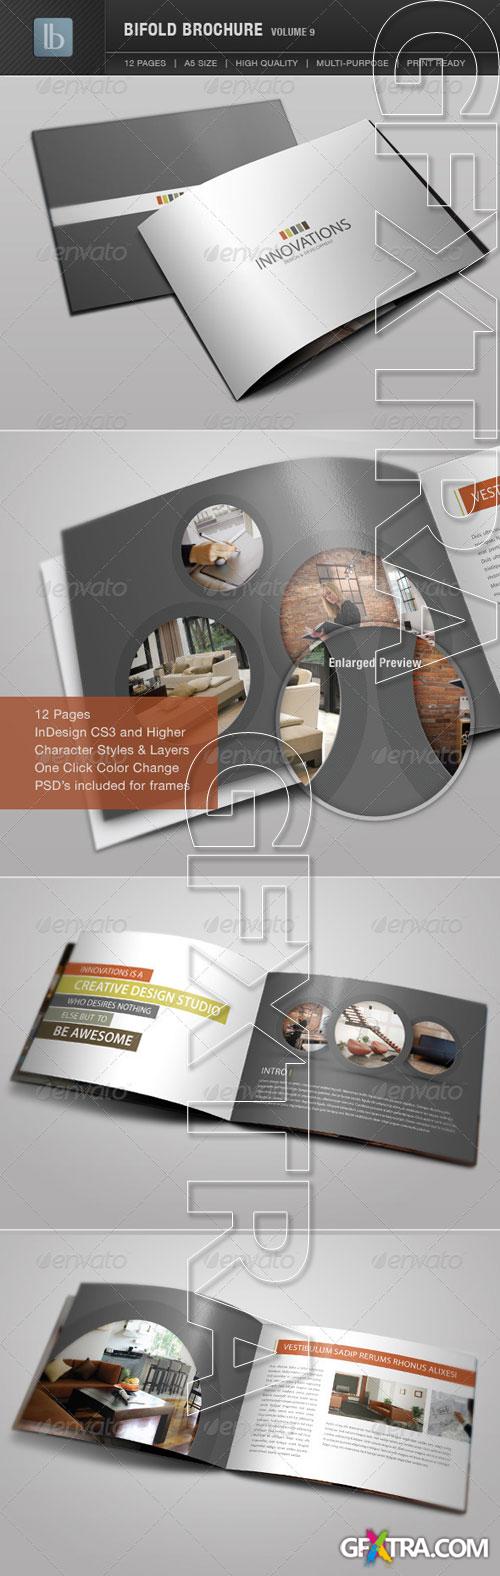 GraphicRiver - Bifold Brochure | Volume 9 2128360